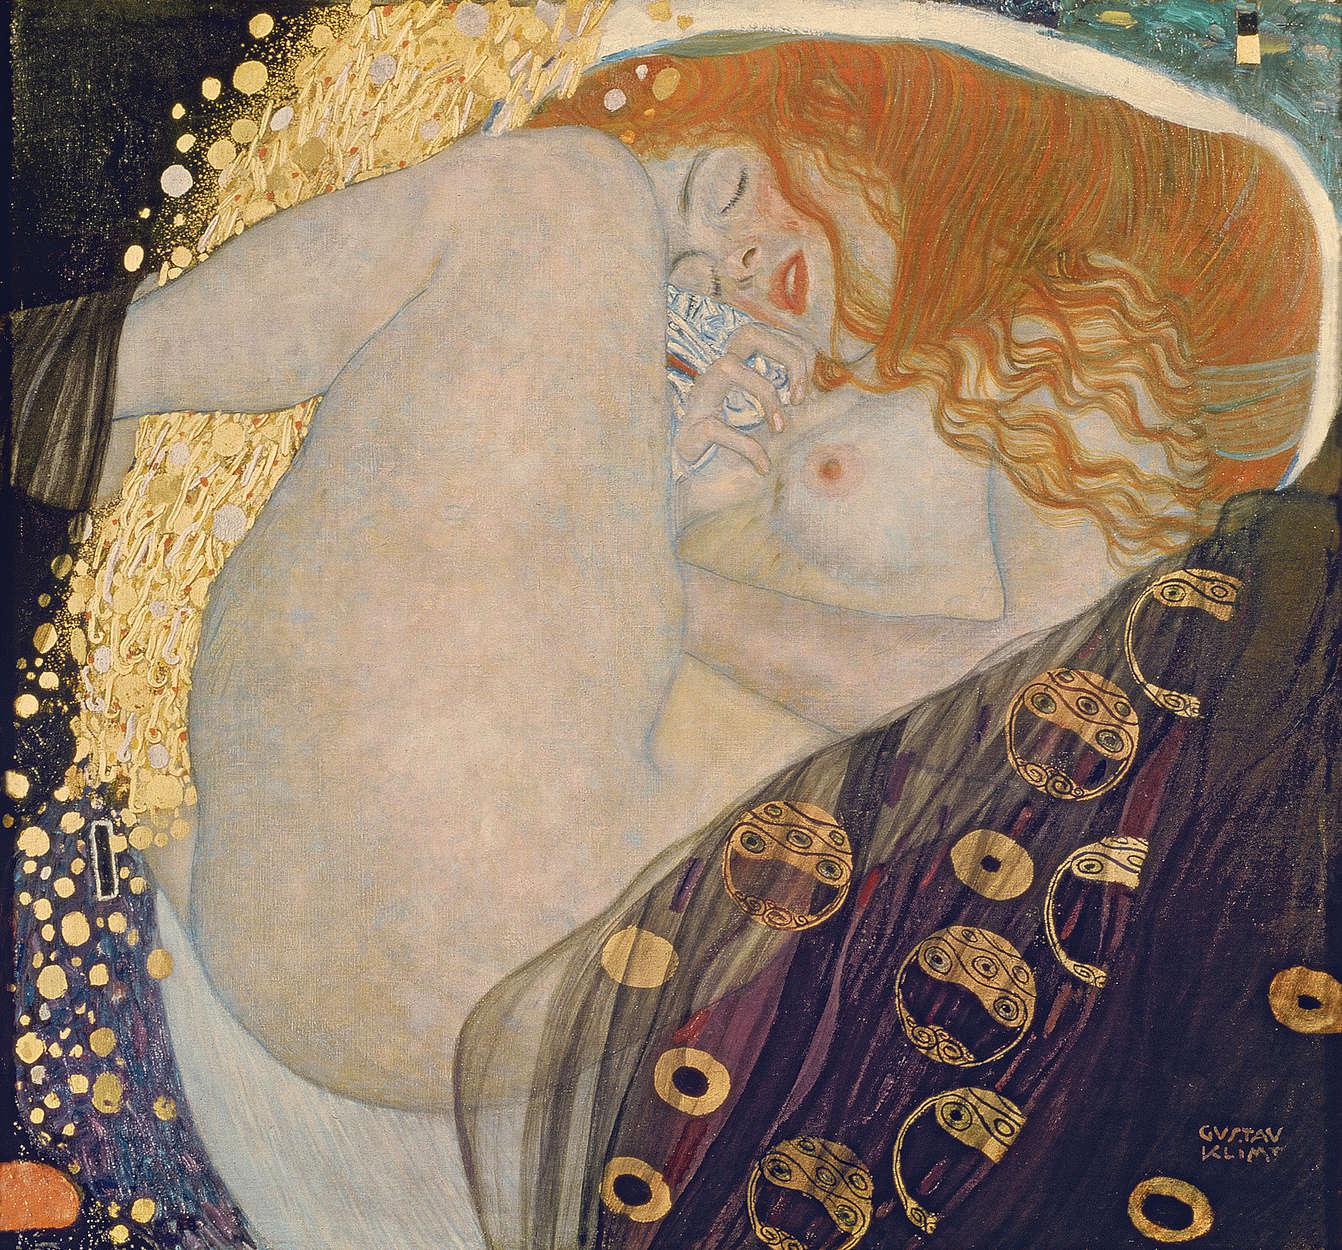             Photo wallpaper "Danae" by Gustav Klimt
        